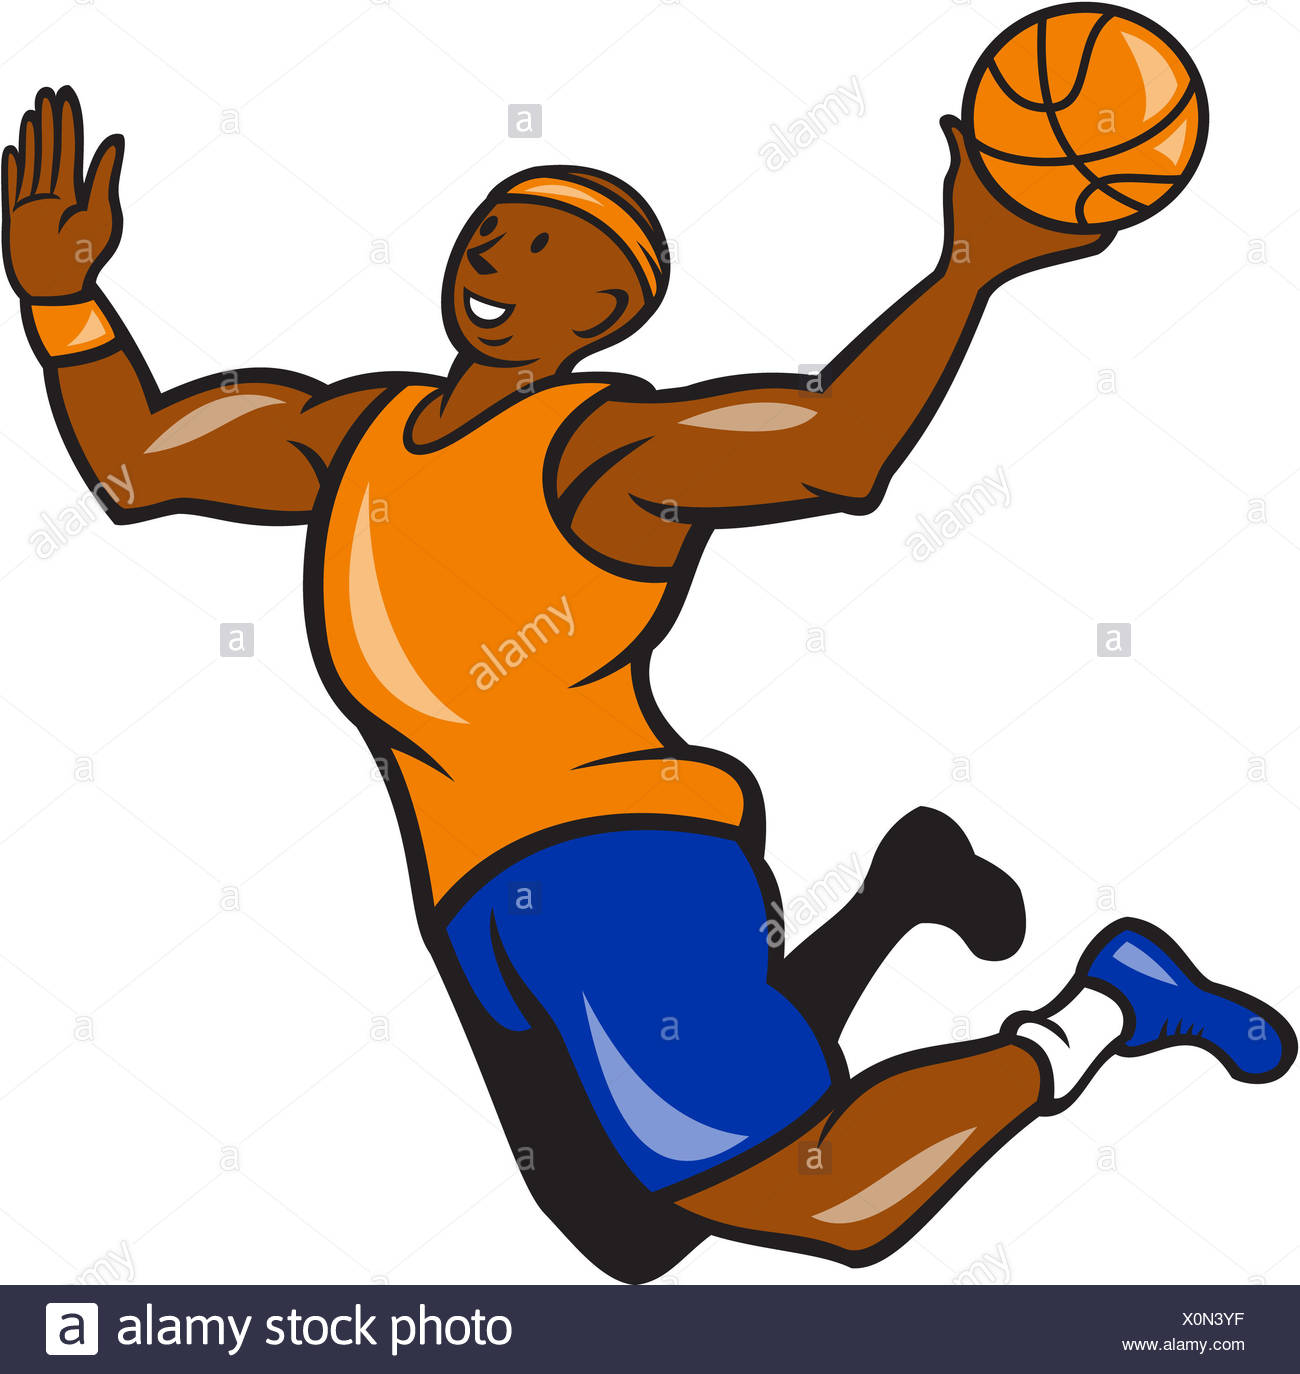 Basketball Player Dunking Ball Cartoon Stock Photo Alamy Watchbuddy wall clocks are the. https www alamy com basketball player dunking ball cartoon image275830003 html